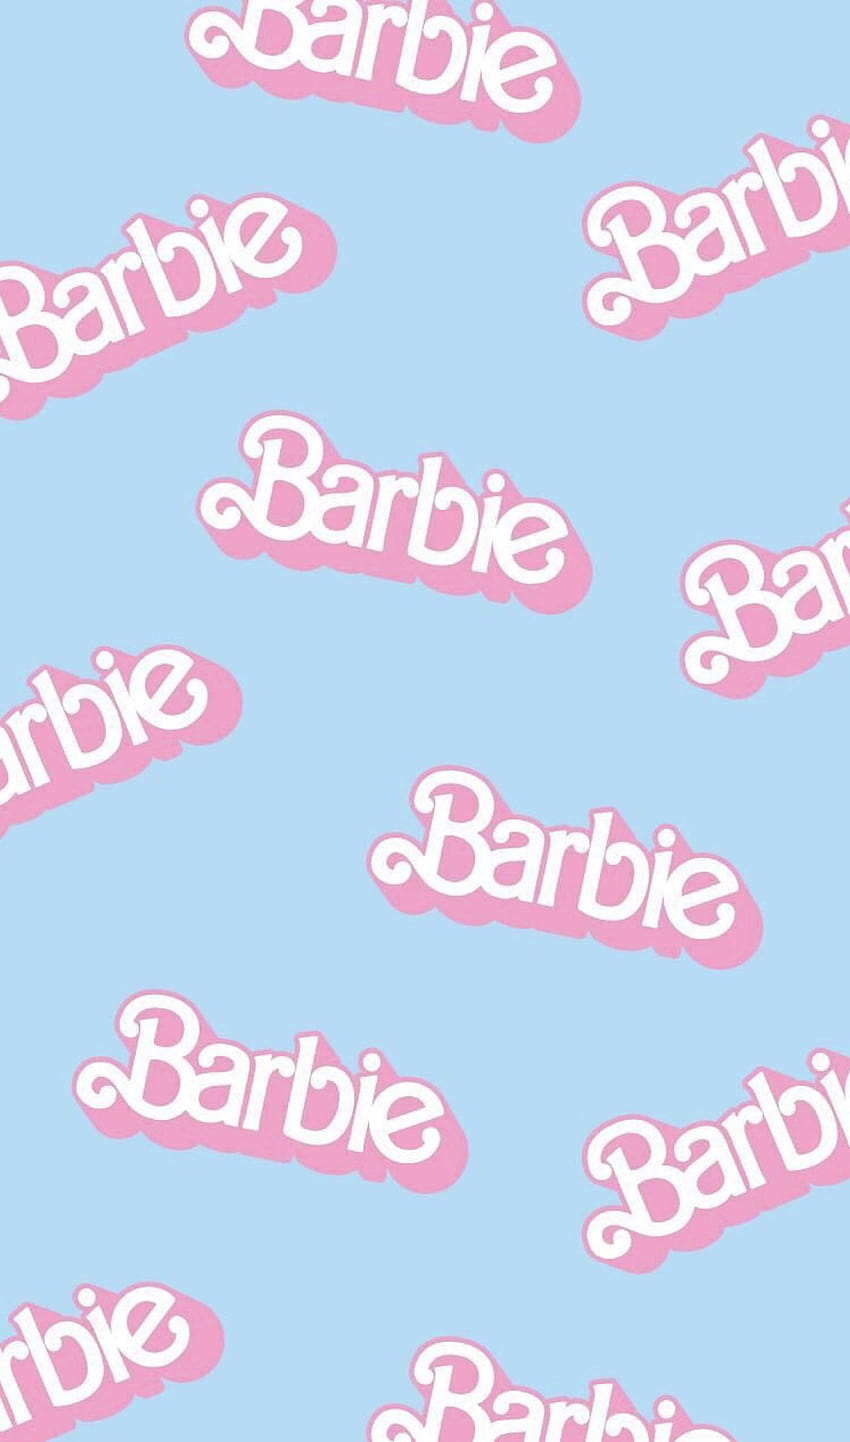 Download Baddie Barbie Aesthetic Neon Pink Collage Wallpaper  Wallpapers com